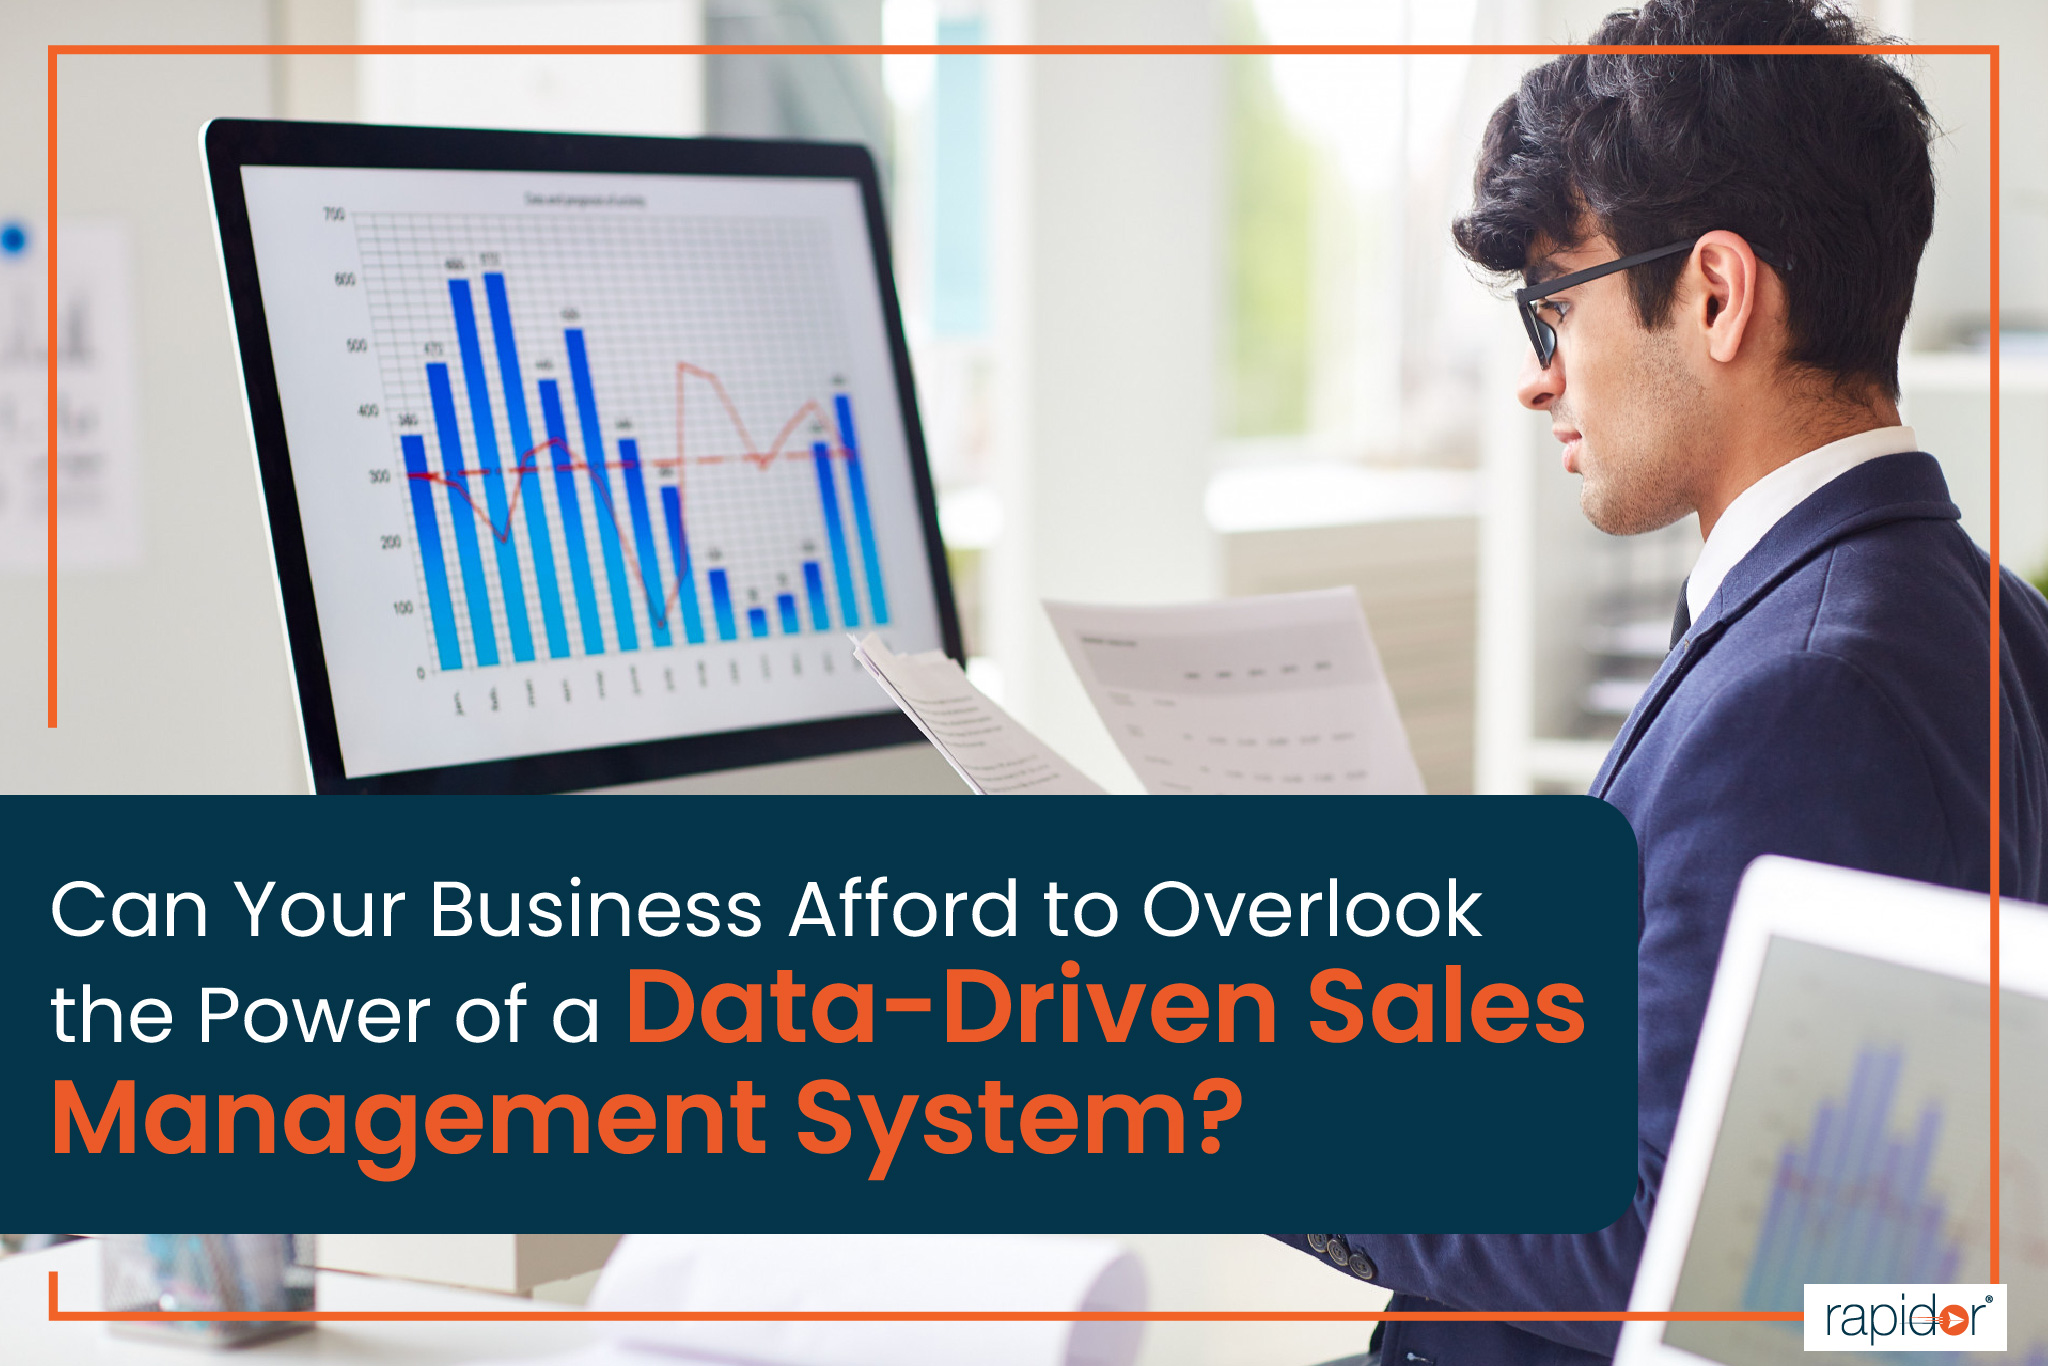 Data-Driven Sales Management System